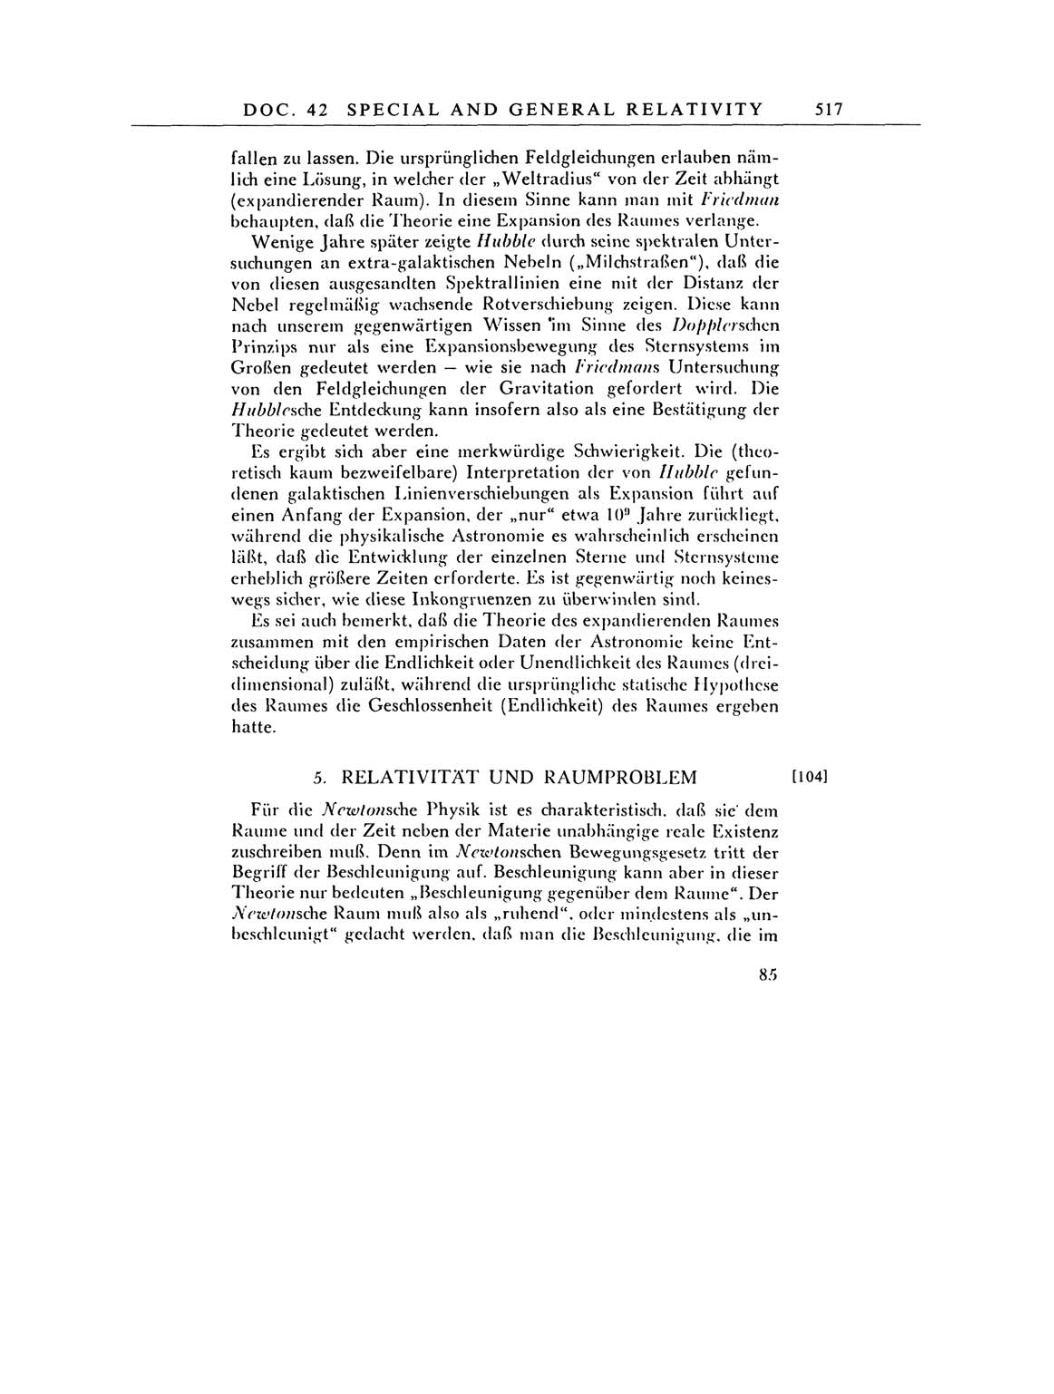 Volume 6: The Berlin Years: Writings, 1914-1917 page 517